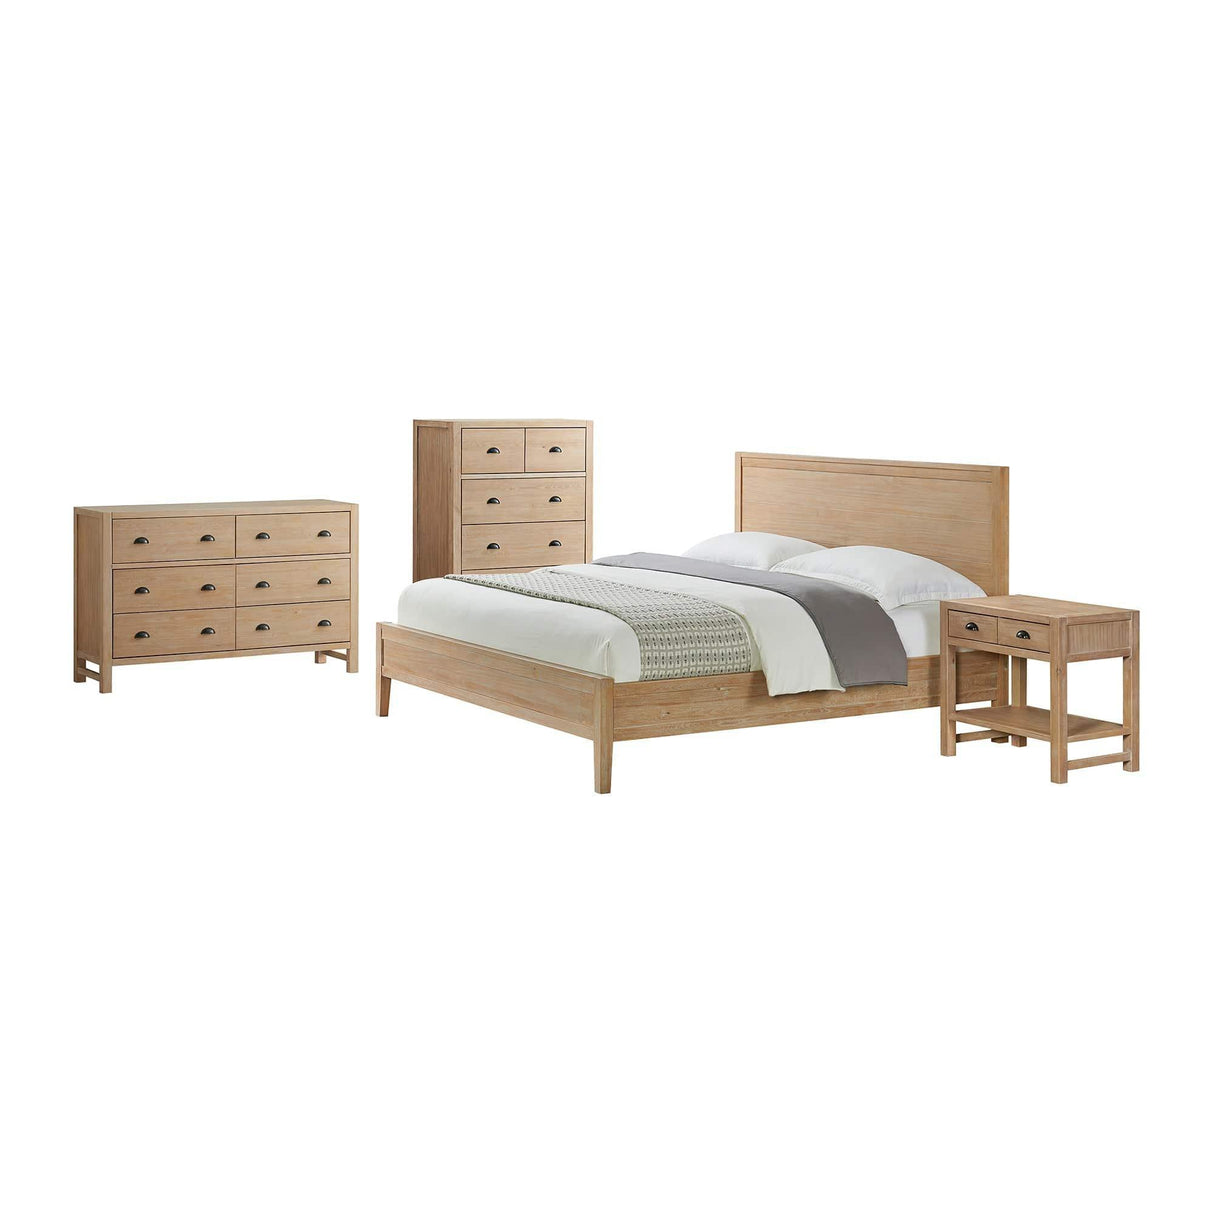 Alaterre Arden 5-Piece Wood Queen Bedroom Set with Queen Bed, Two 2- Nightstands with open shelf, 5-Drawer Chest, 6-Drawer Dresser ANAN022343029 - Bedroom Depot USA